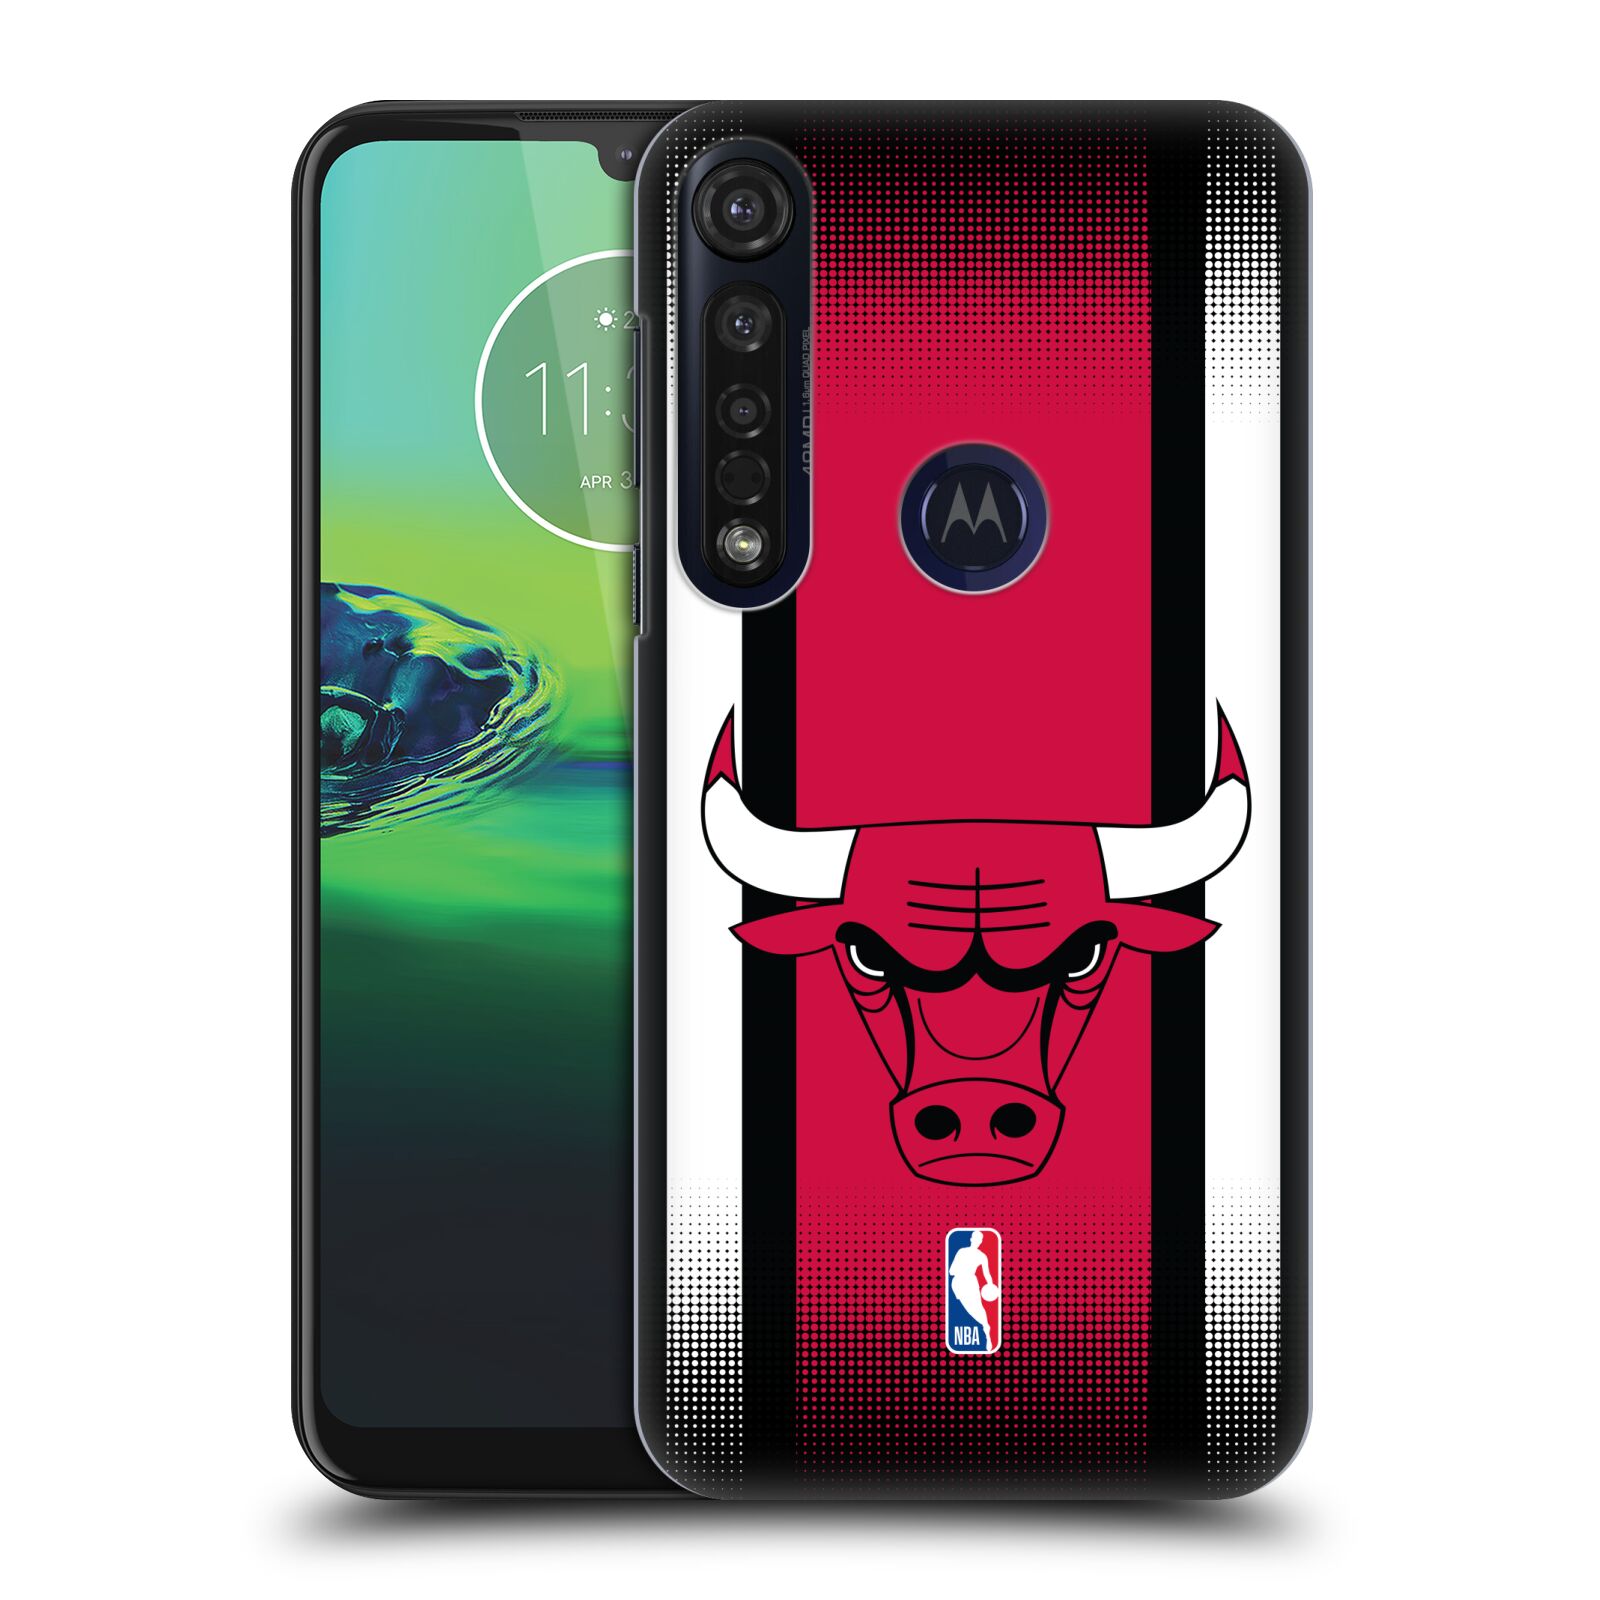 Pouzdro na mobil Motorola Moto G8 PLUS - HEAD CASE - NBA Basketbalový klub Chicago Bulls logo pruhy